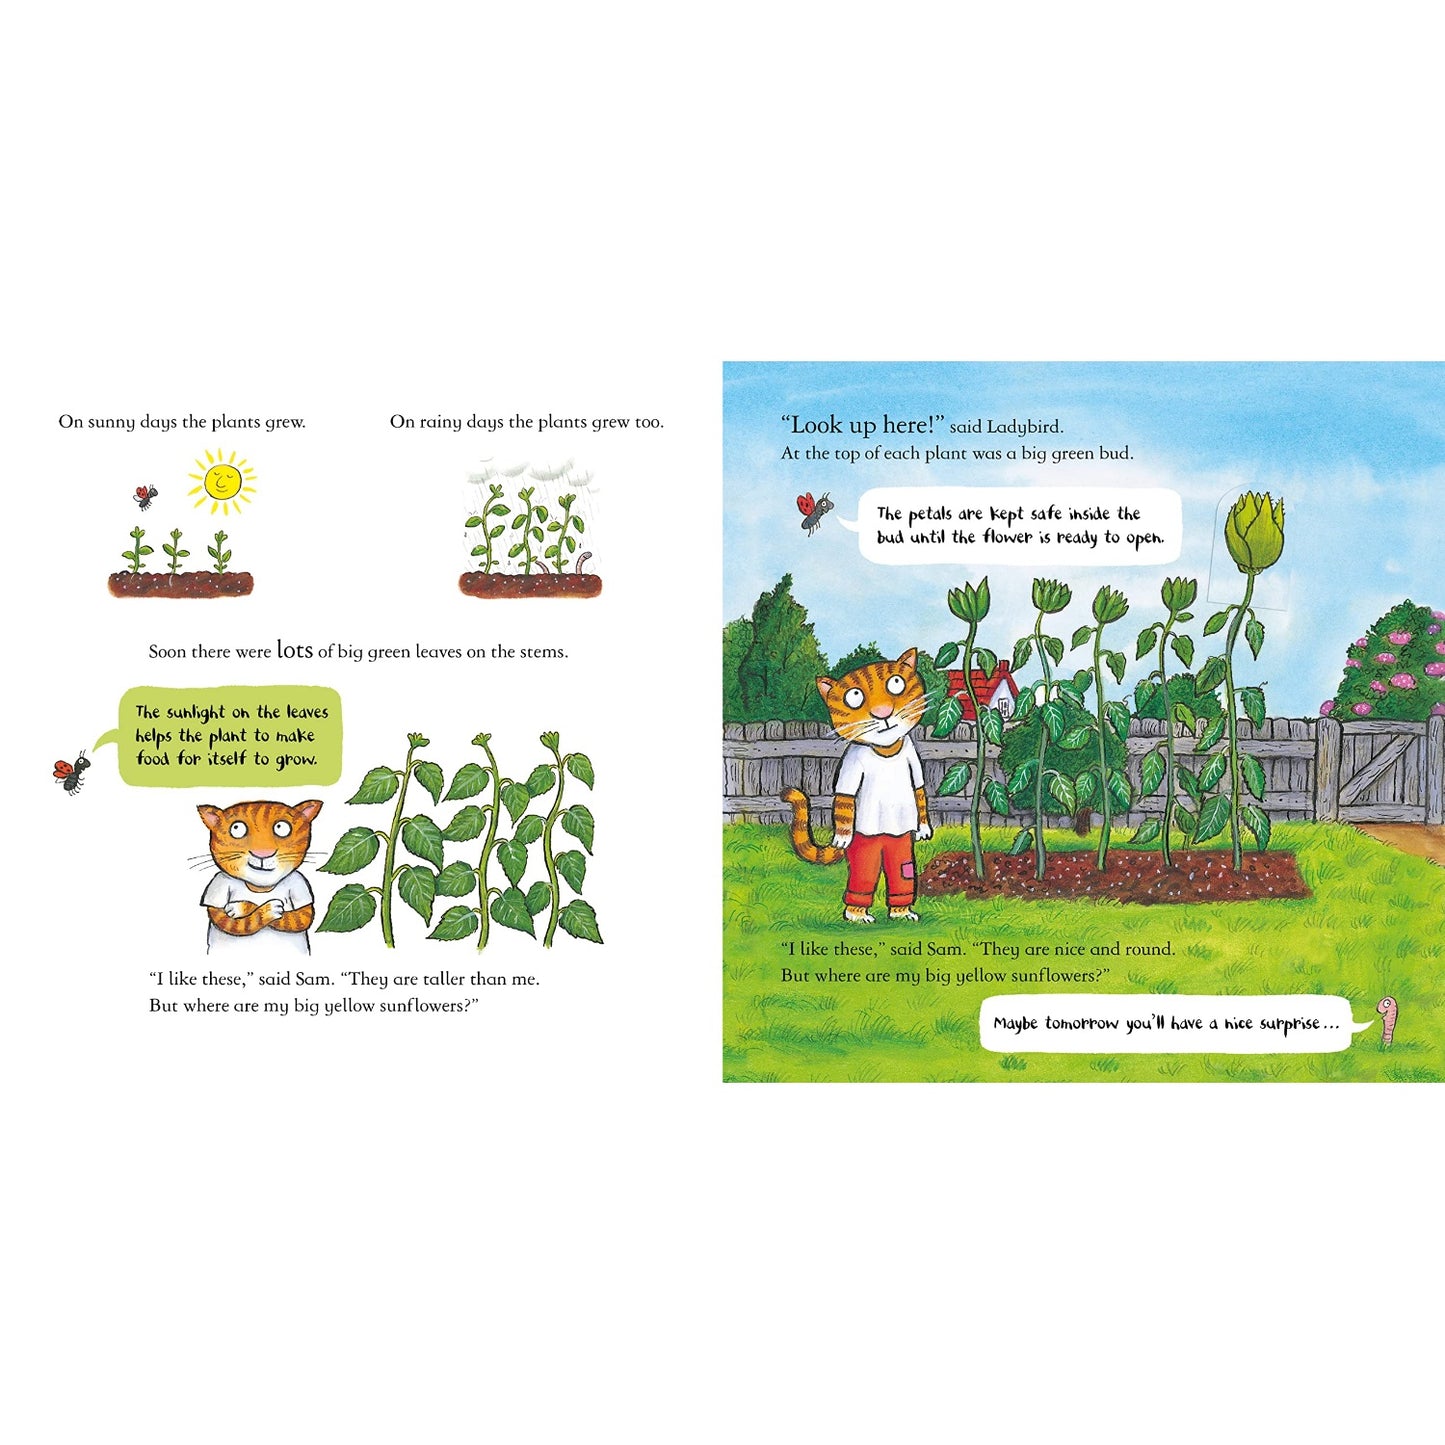 Sam Plants a Sunflower | Hardcover | Children’s Book on Nature